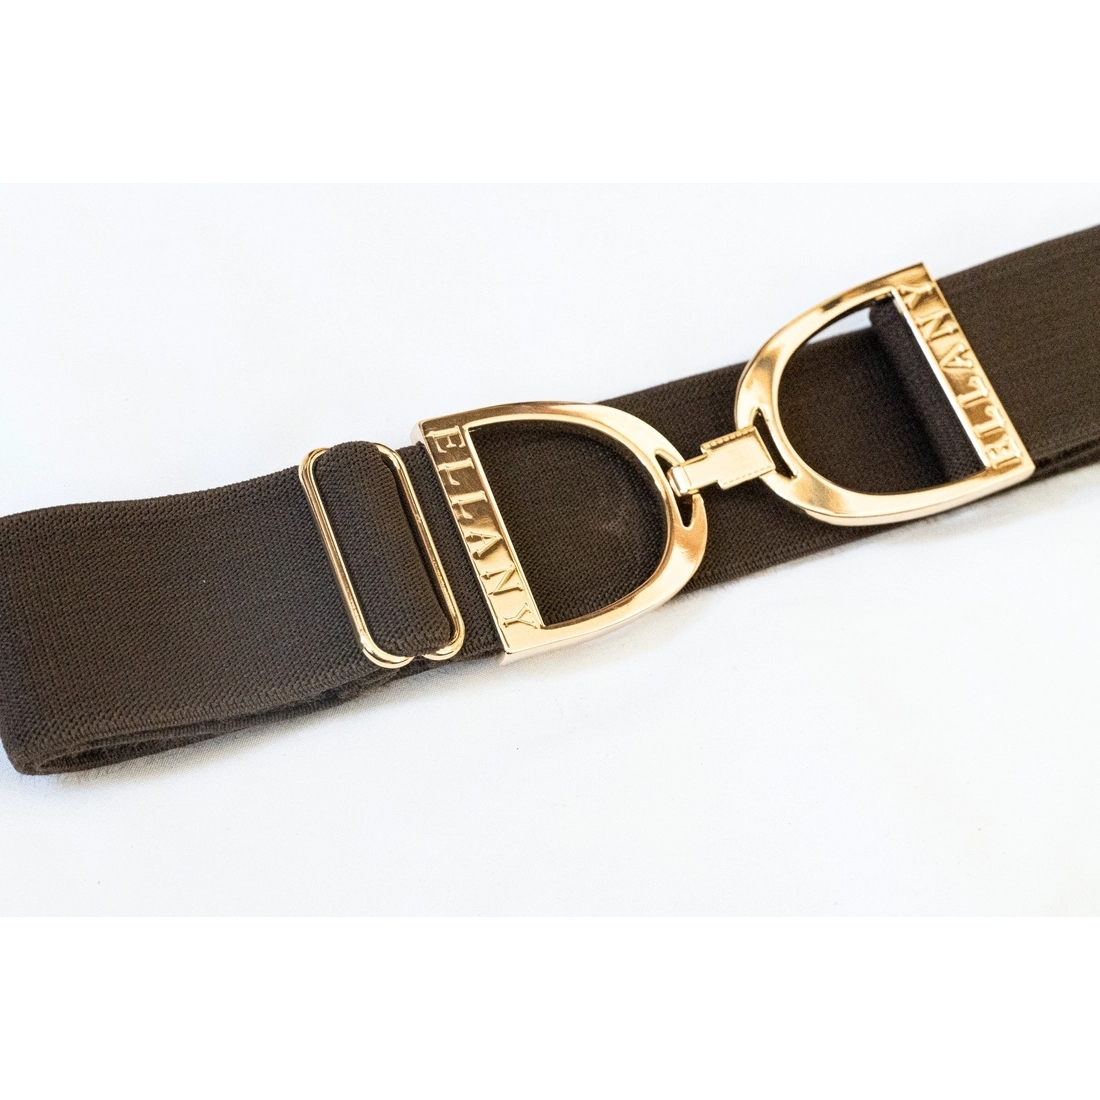 Ellany Equestrian Gold Stirrup Belt 1.5 IN (Brown) Accessories Belts at ...